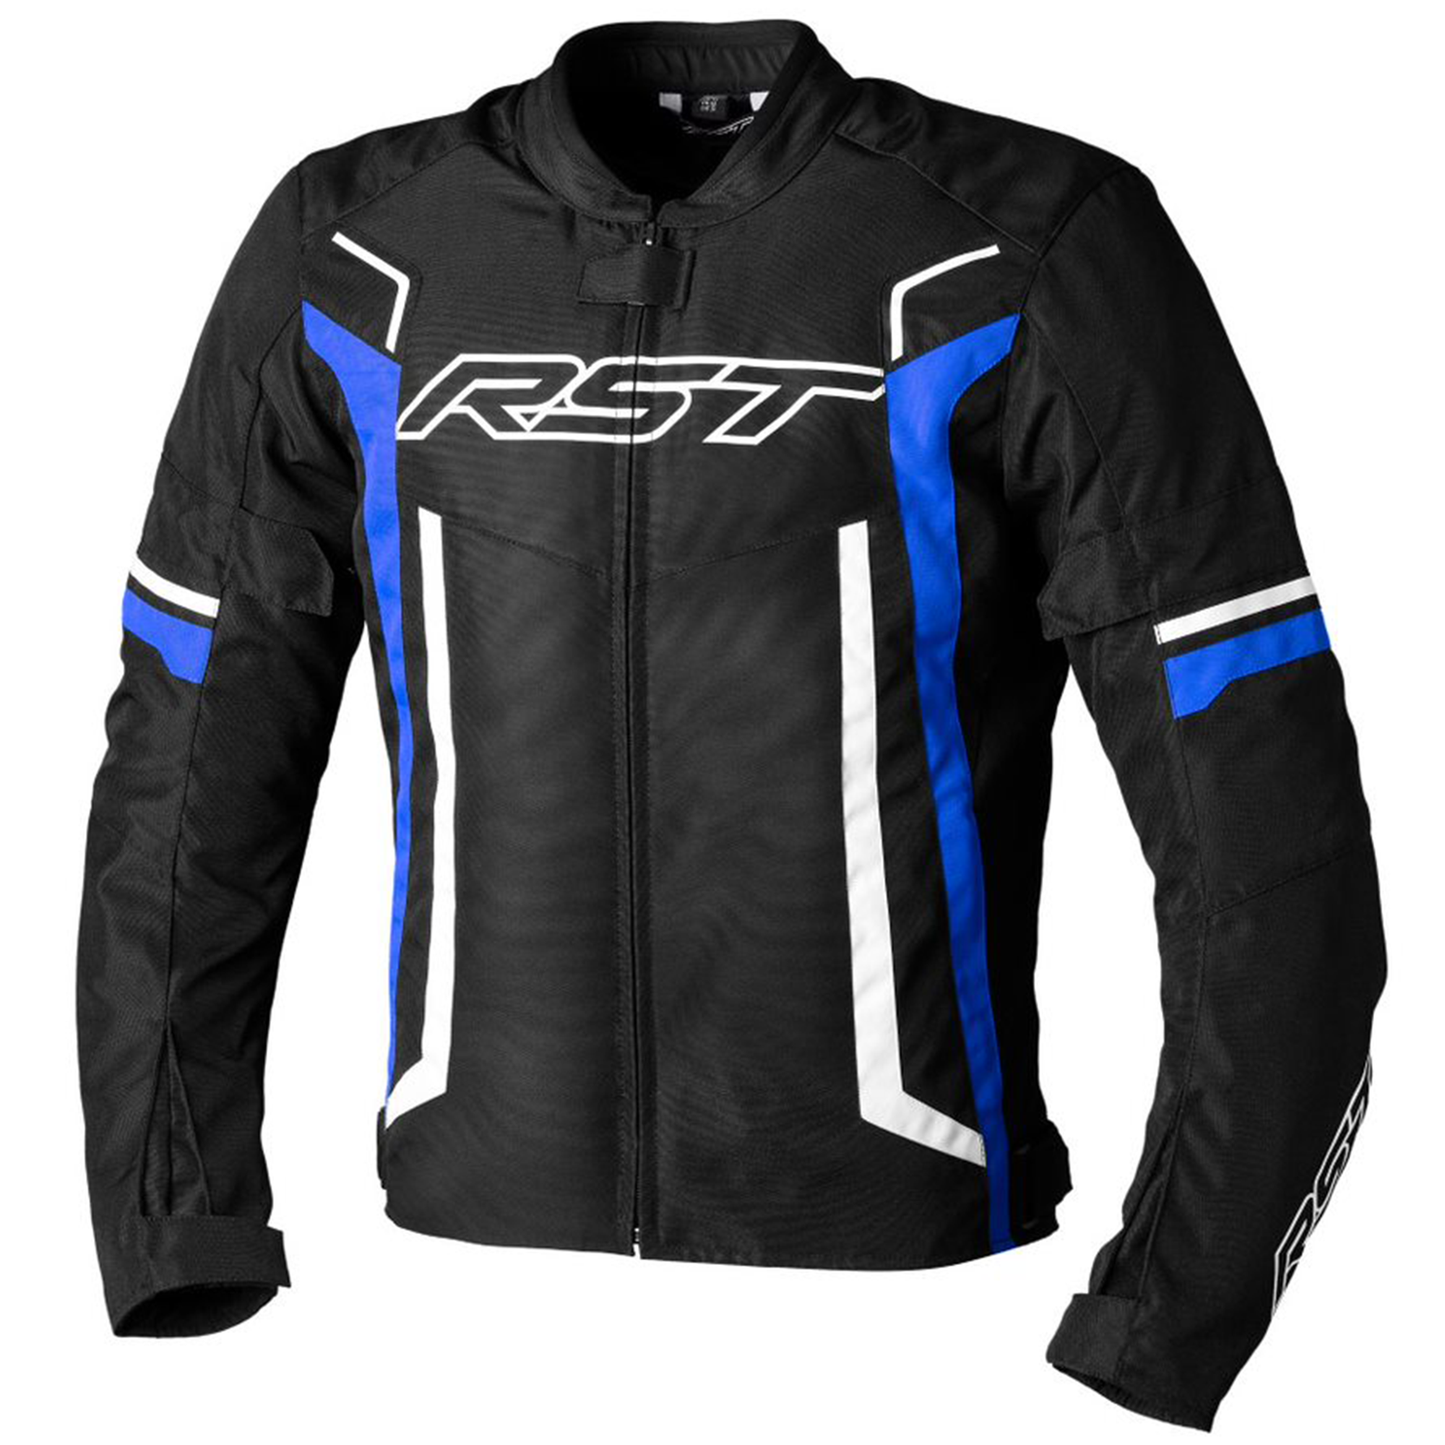 RST Pilot Evo (CE) Men's Textile Jacket - Black/Blue/White